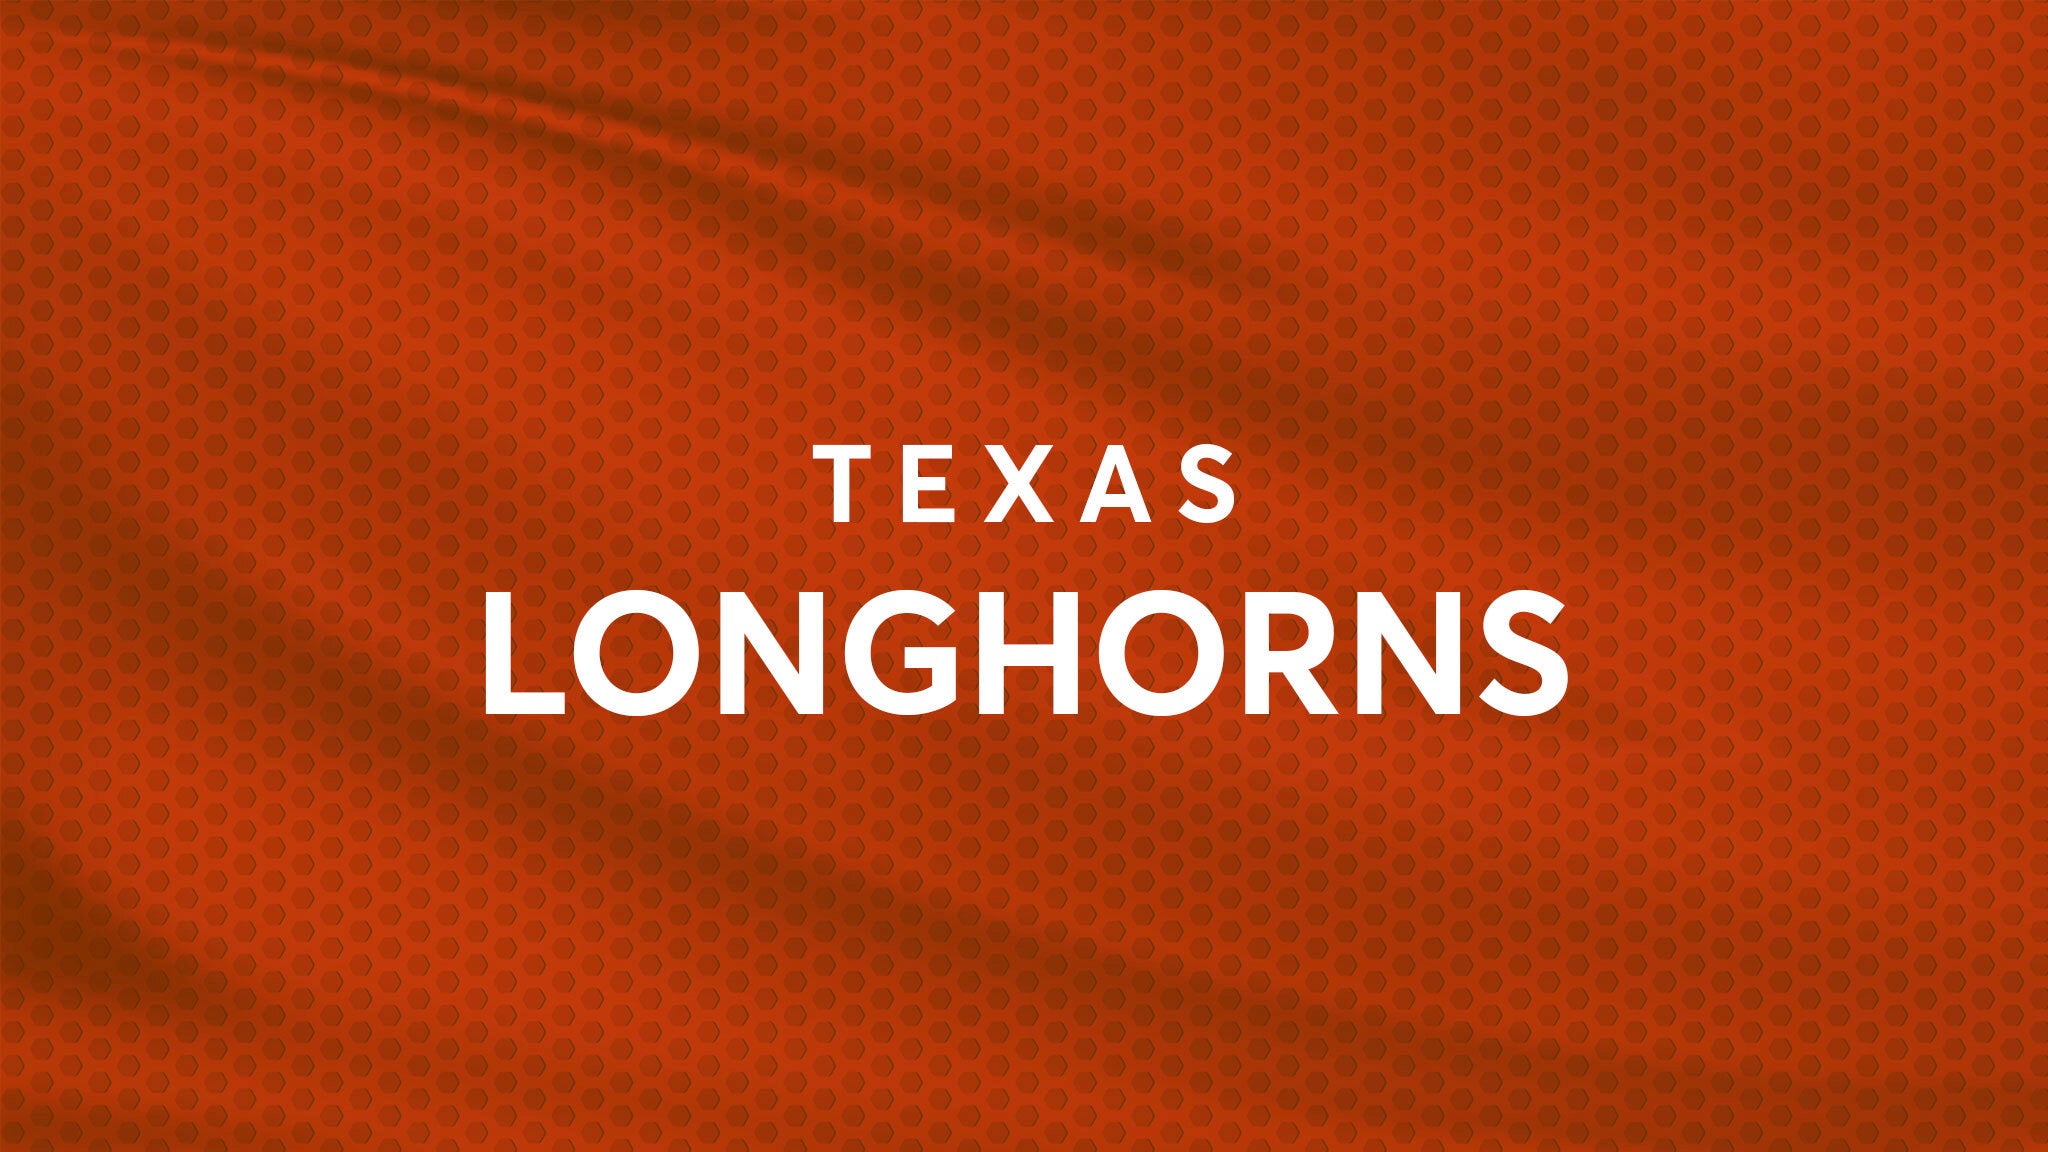 Texas Longhorns Baseball vs. Kansas Jayhawks Baseball